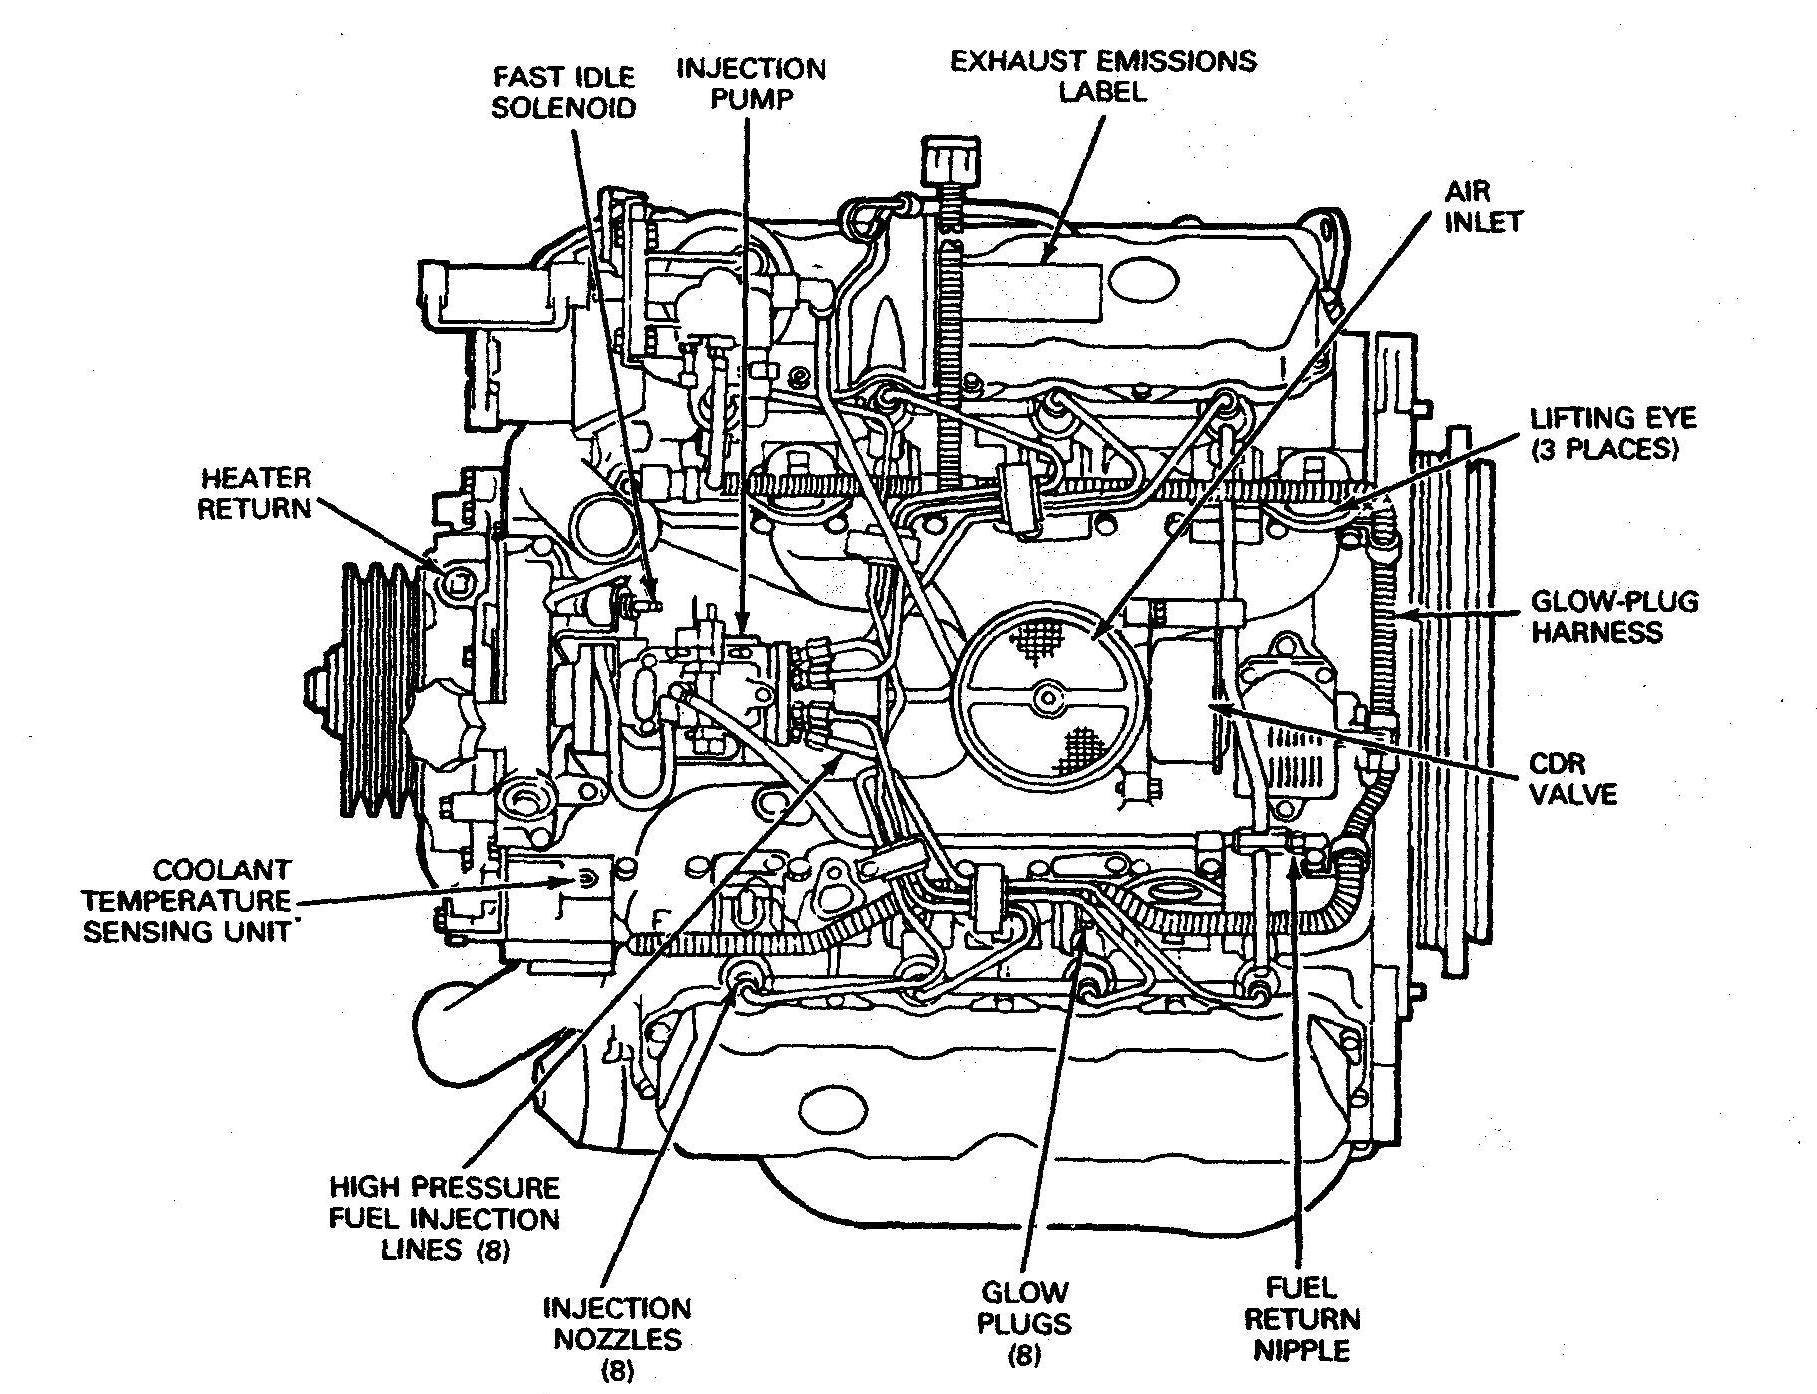 Ford 3 0 V6 Engine Diagram Automotive Engine Diagram Wiring Diagrams Of Ford 3 0 V6 Engine Diagram